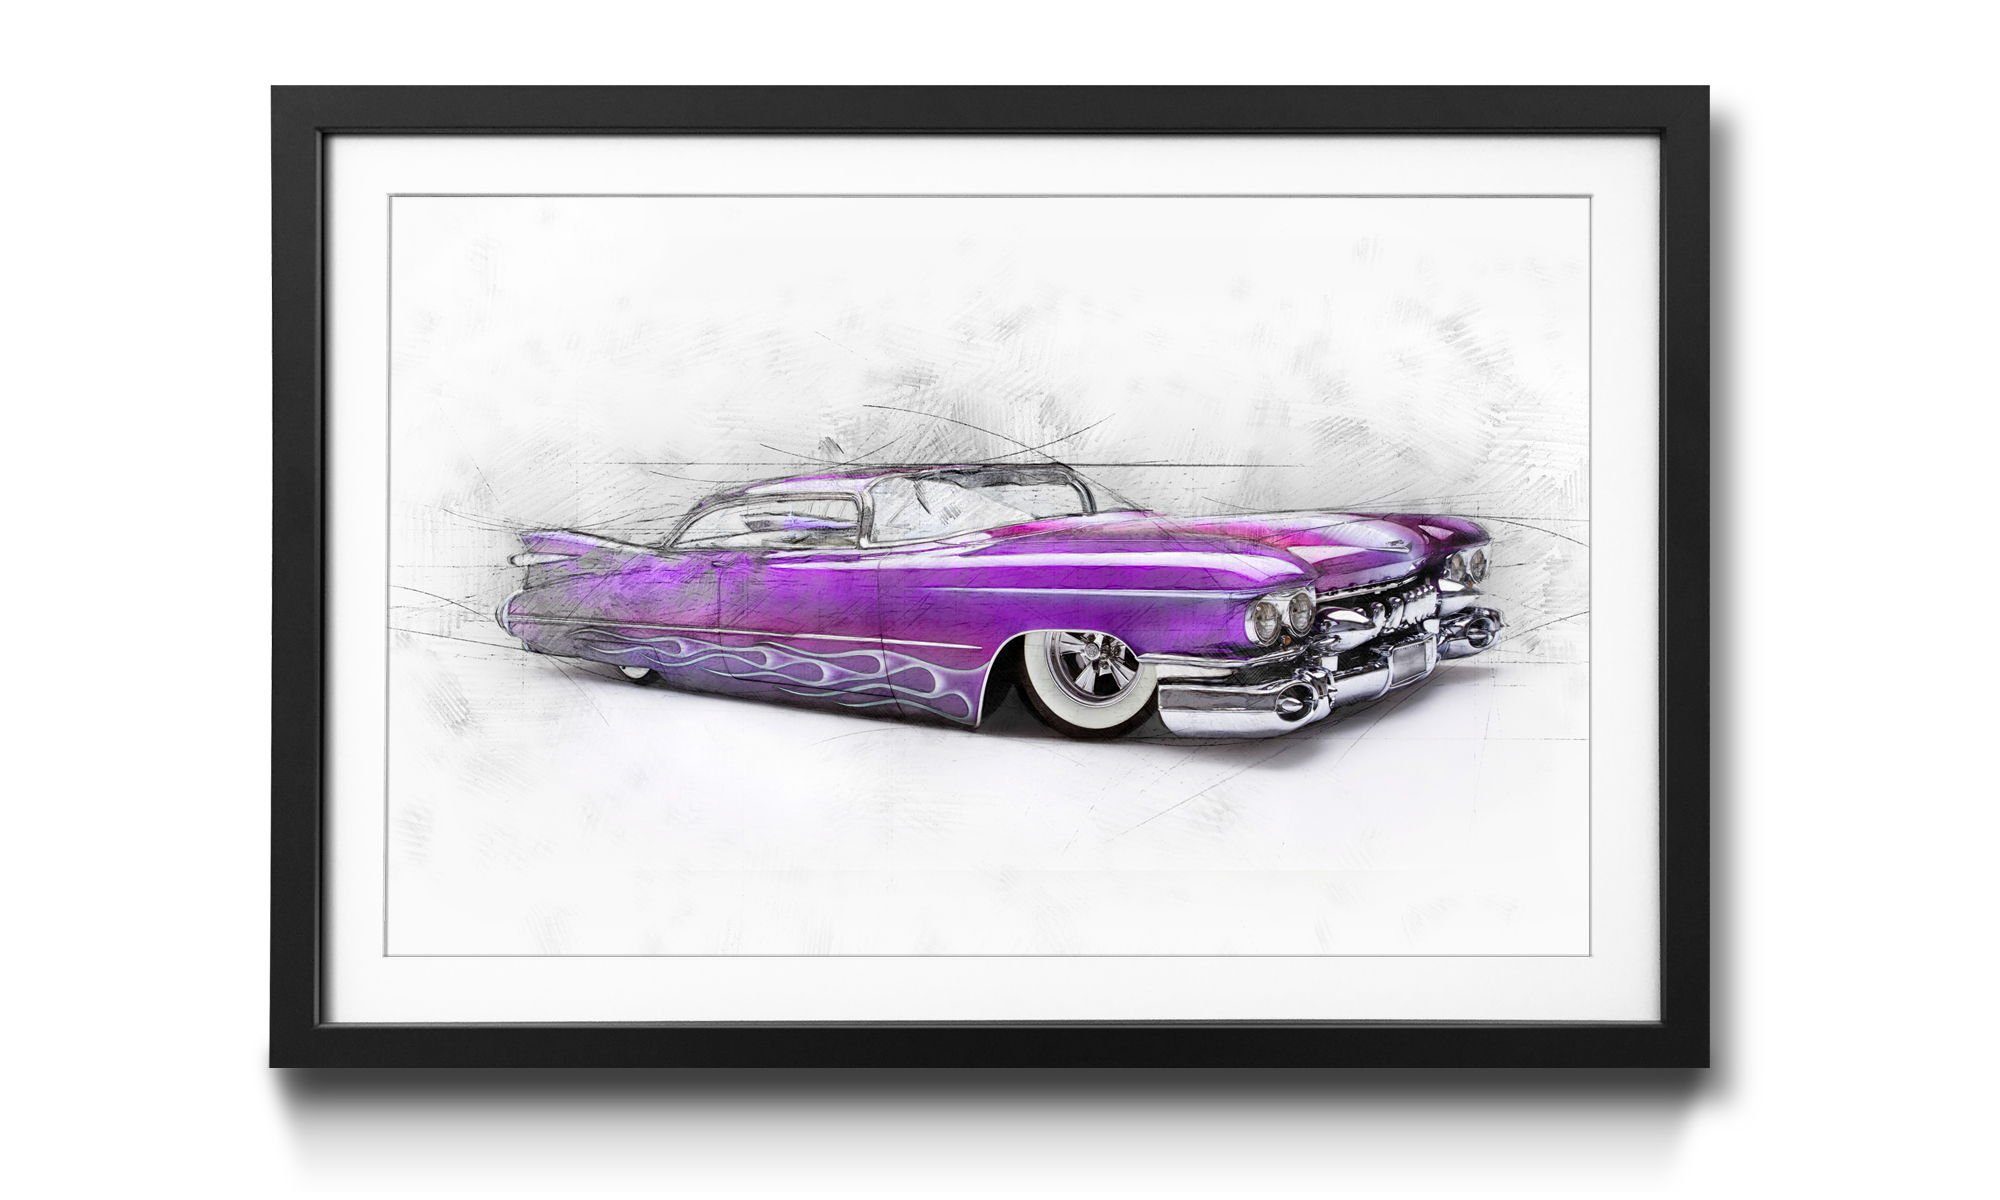 WandbilderXXL mit Wandbild, in Auto, 4 erhältlich Rahmen Größen Bild Pinky Cadillac,